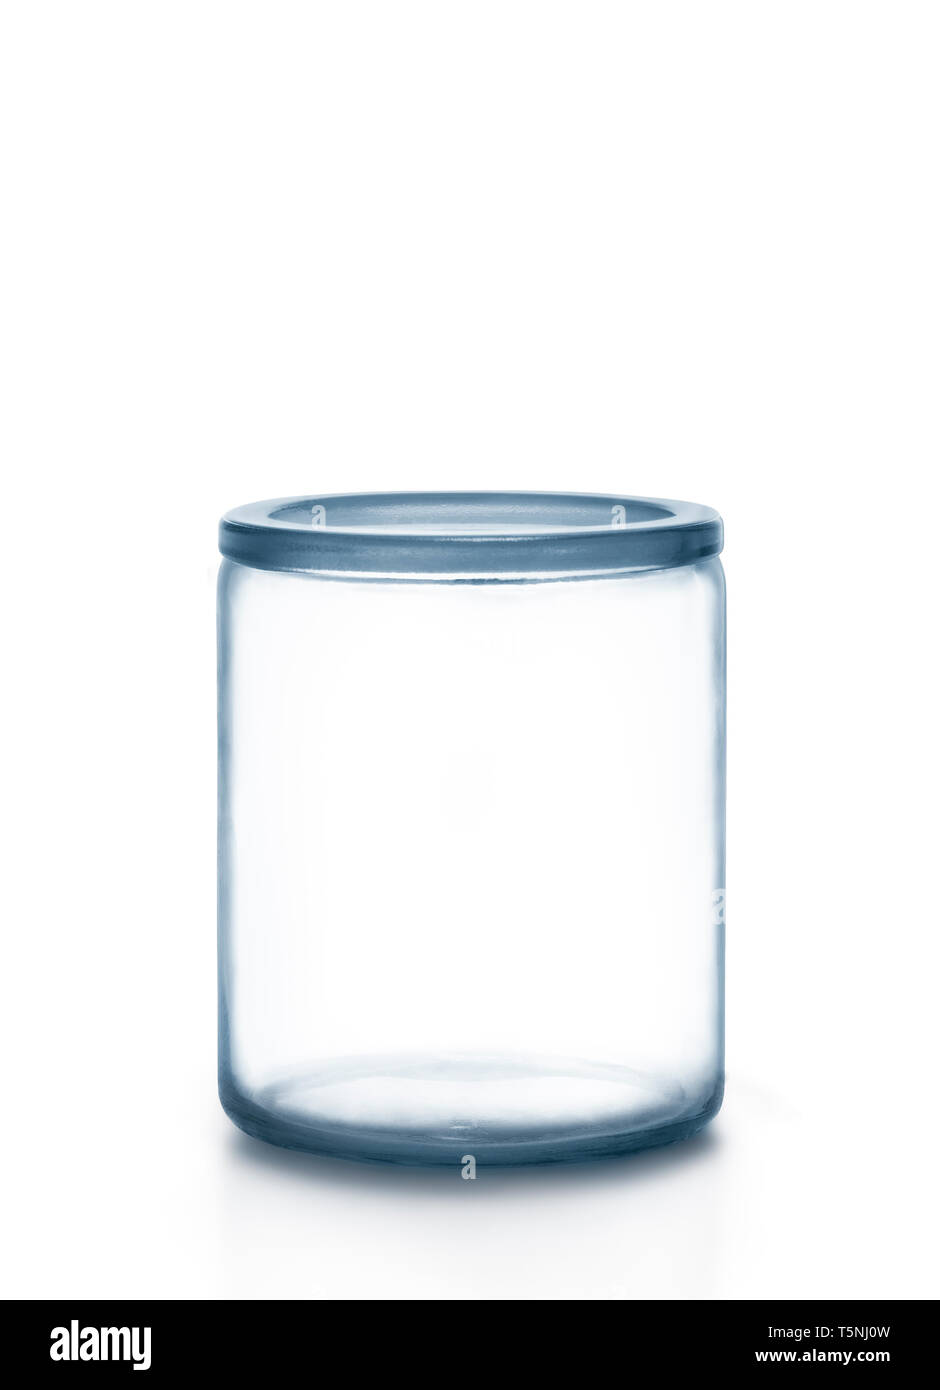 Empty transparent glass jar against white background Stock Photo